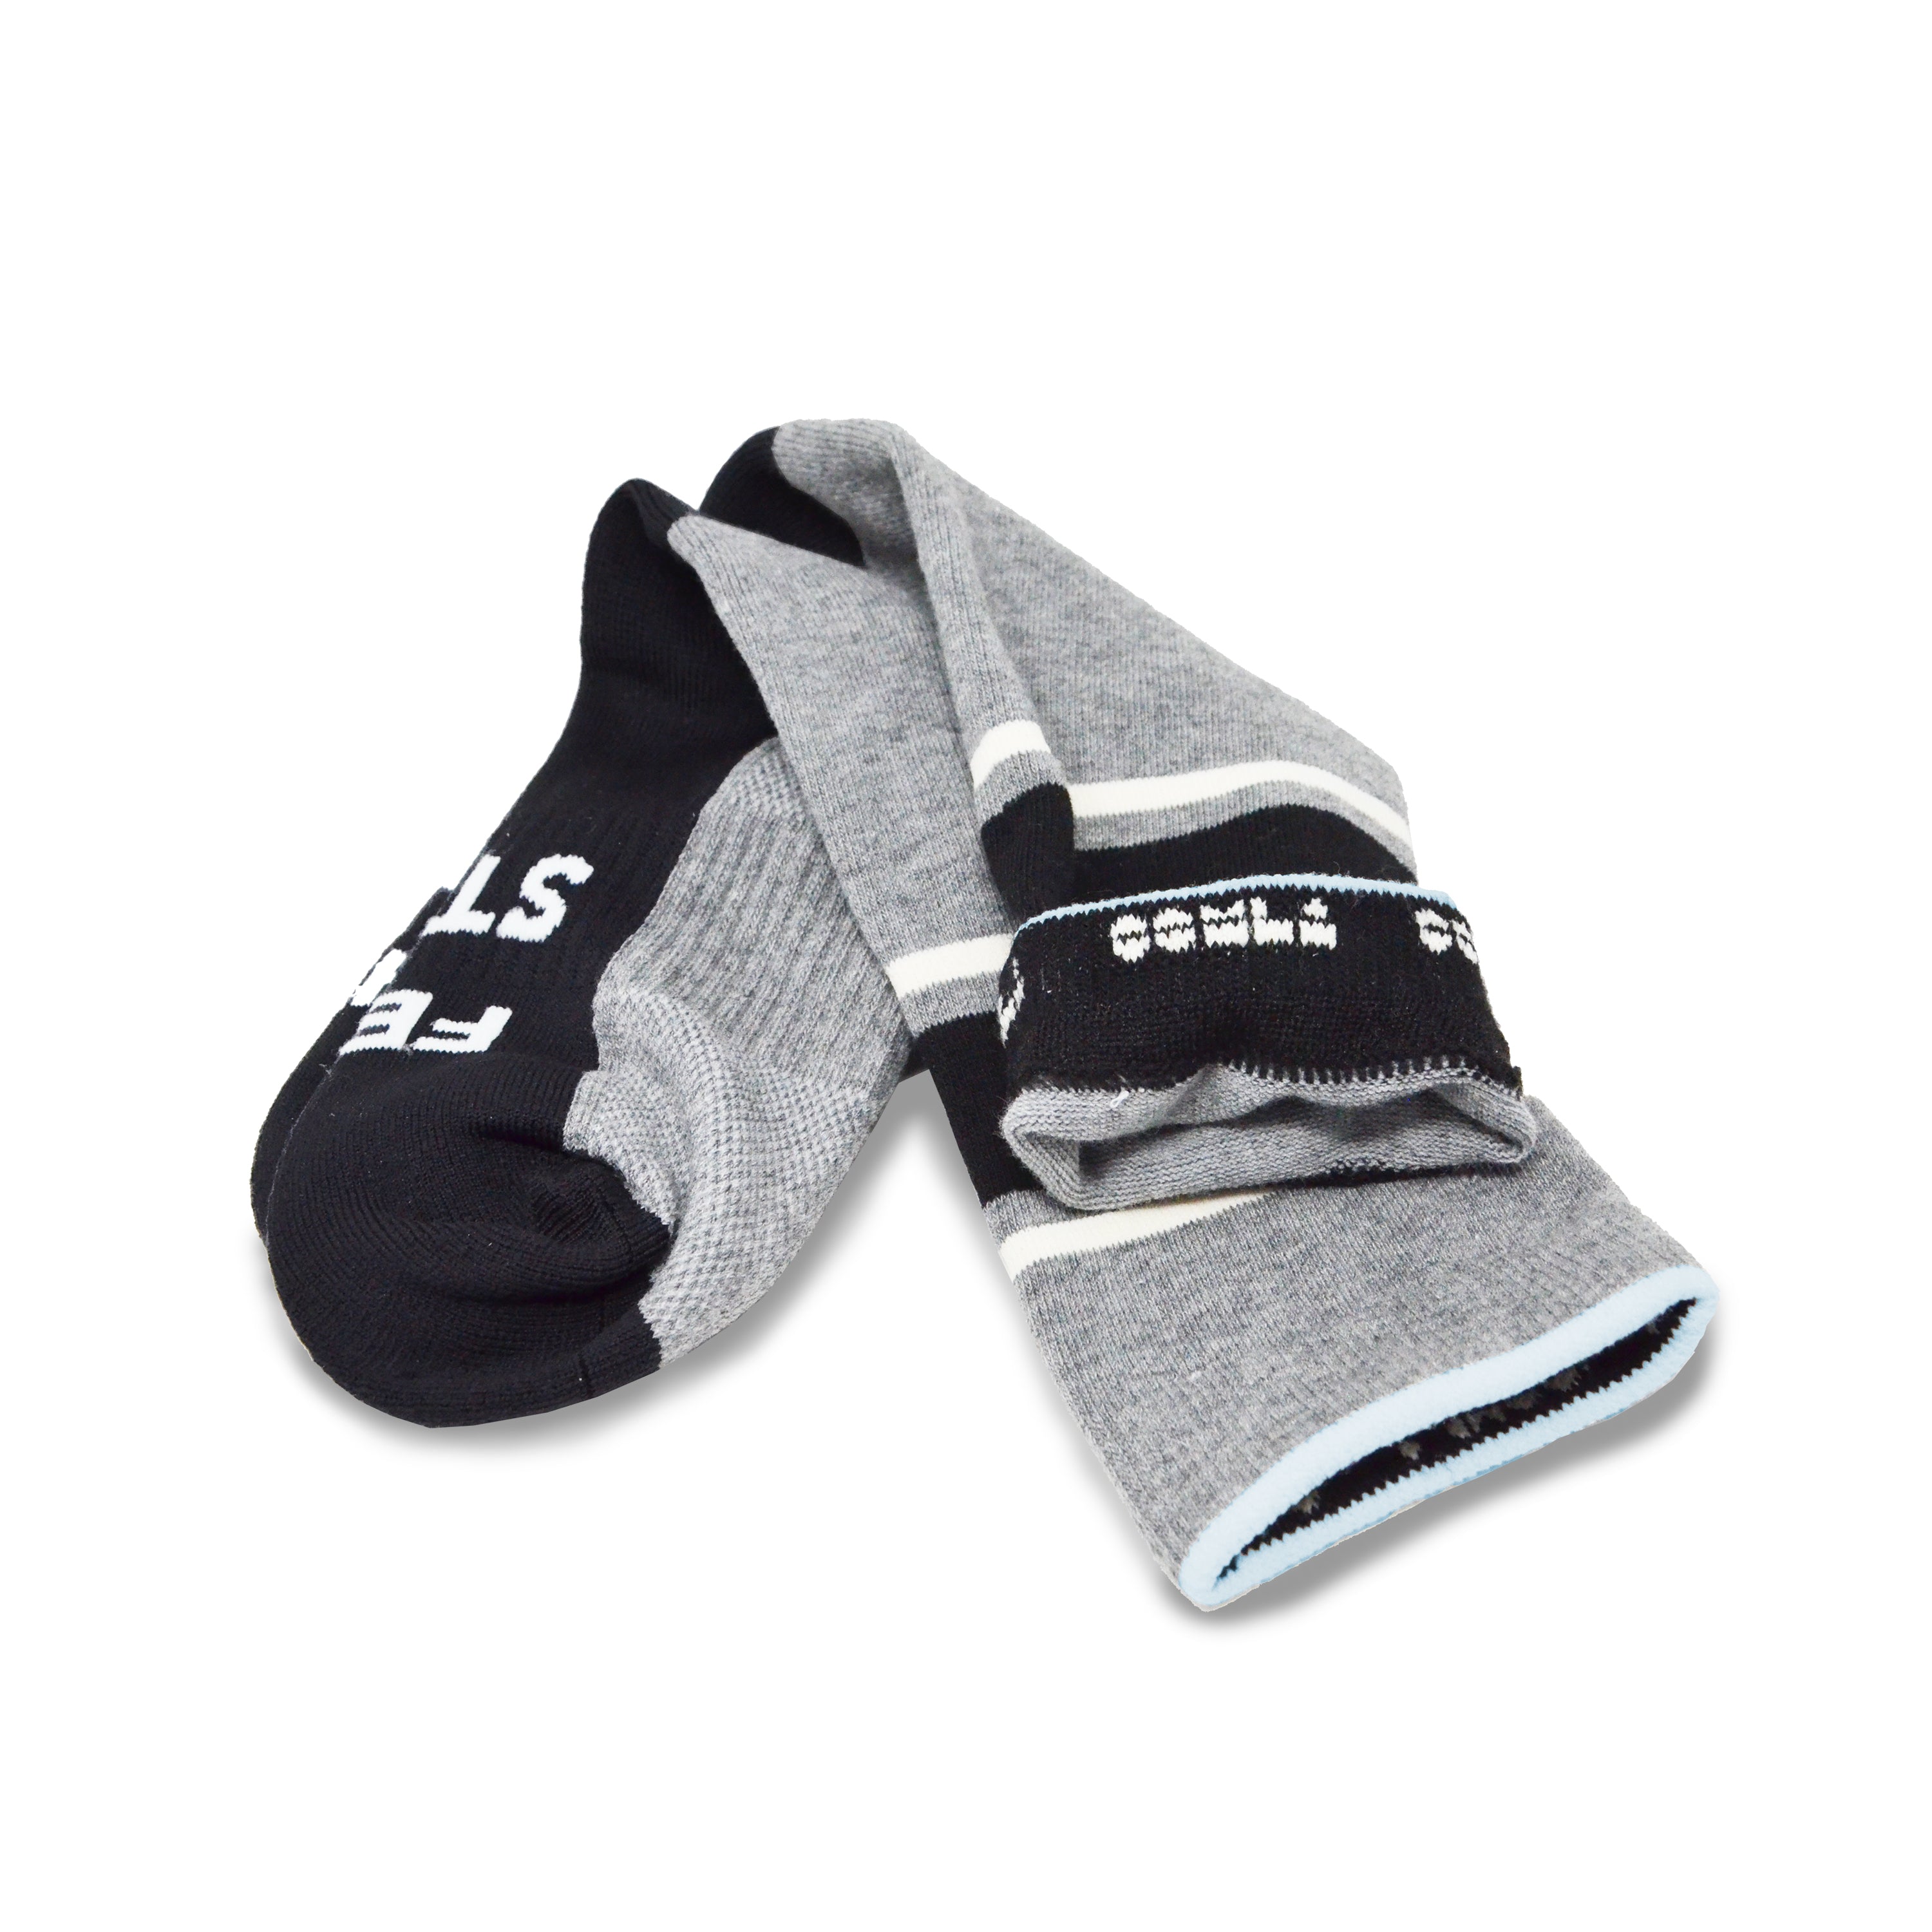 straight triple threat bundle in grey / black (bra + shorts + socks bundle)